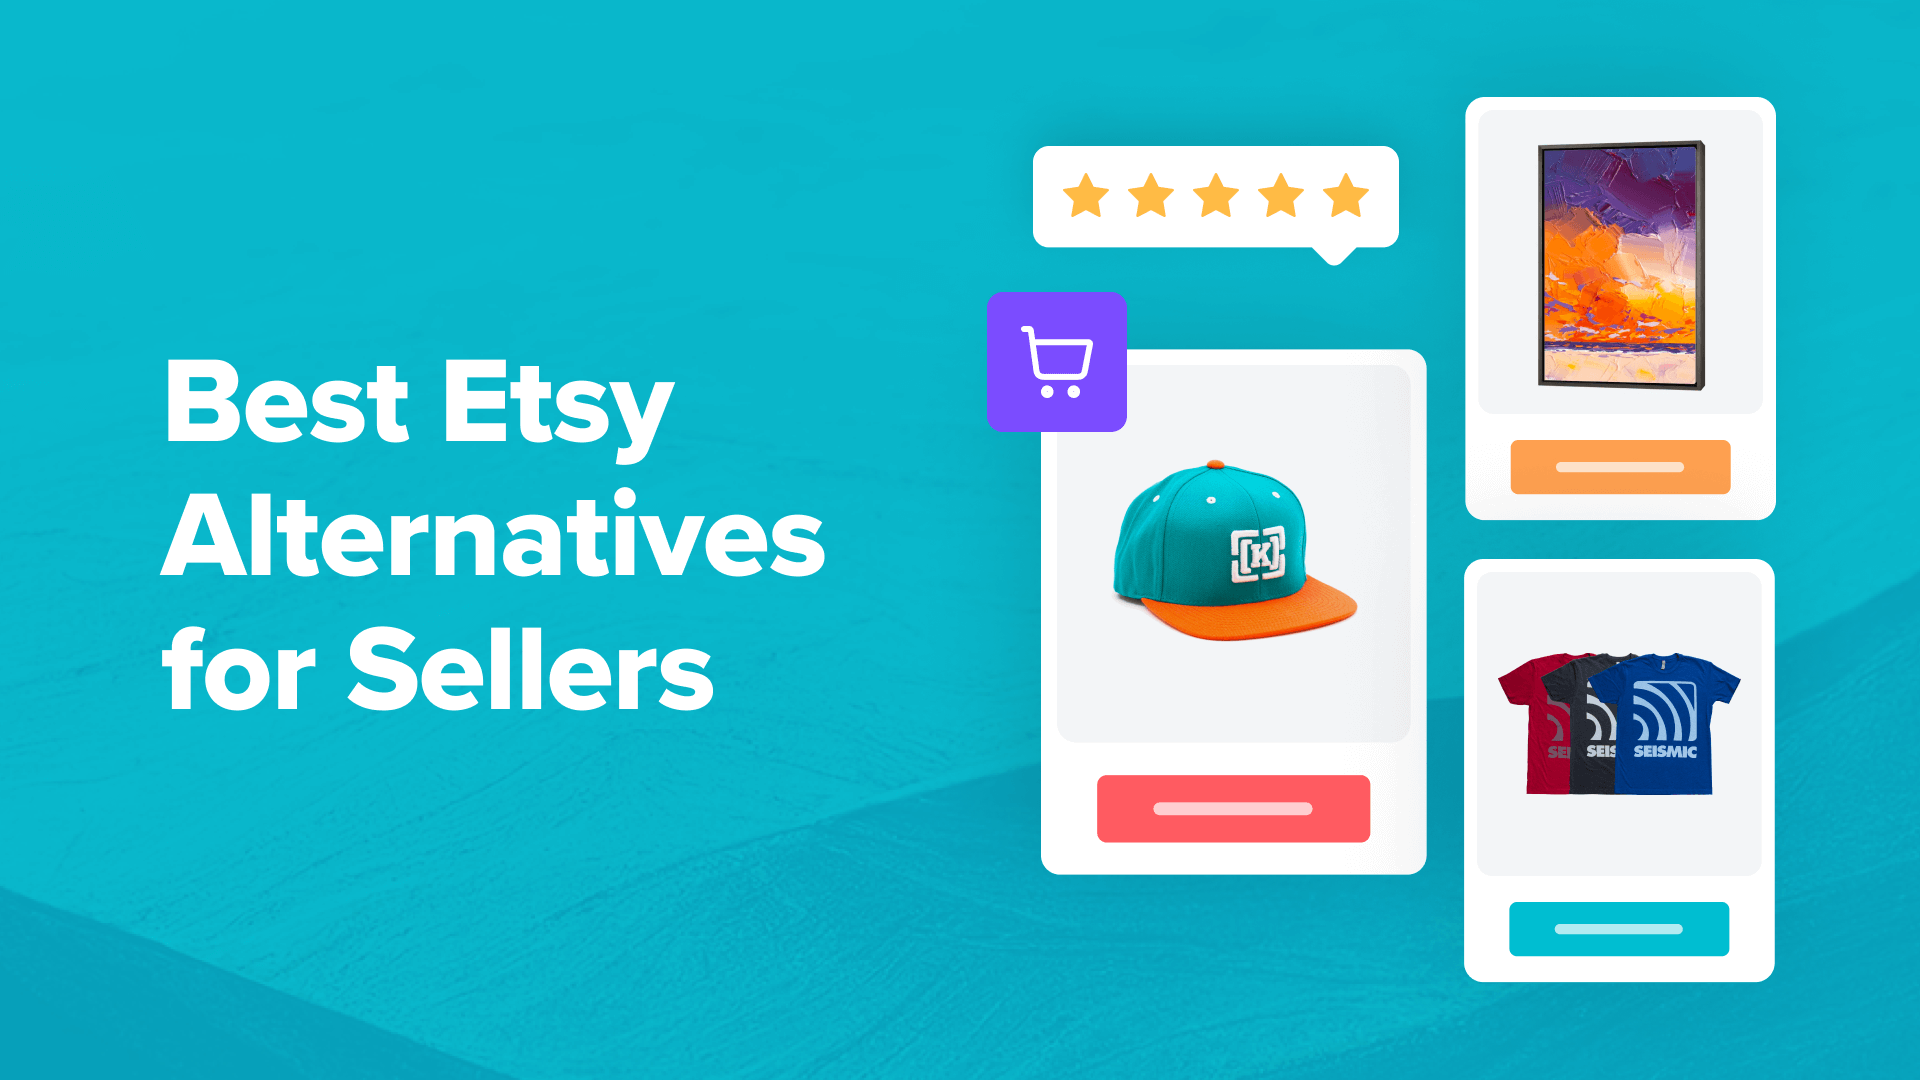 9 Best Etsy Alternatives for Sellers (More Freedom + Less Fees)